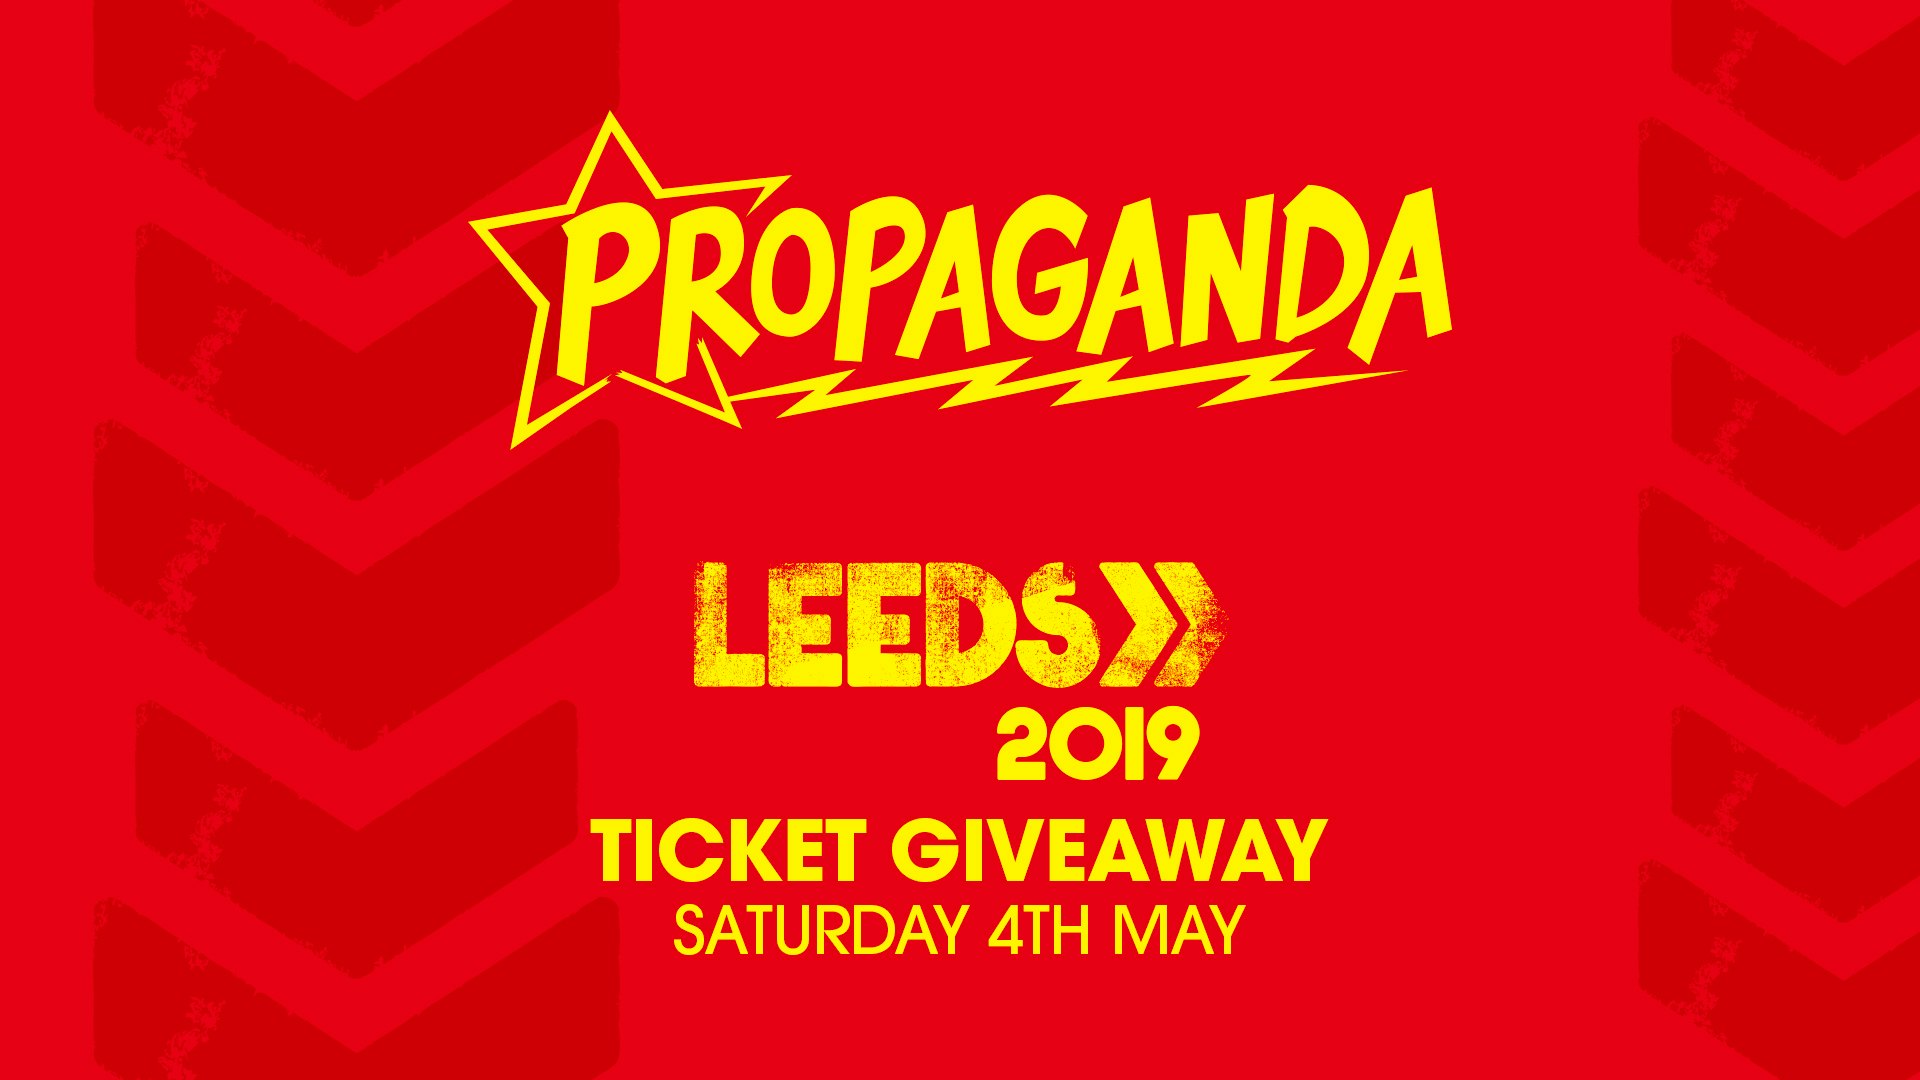 Propaganda Sheffield & Dirty Deeds – Leeds Festival Ticket Giveaway!